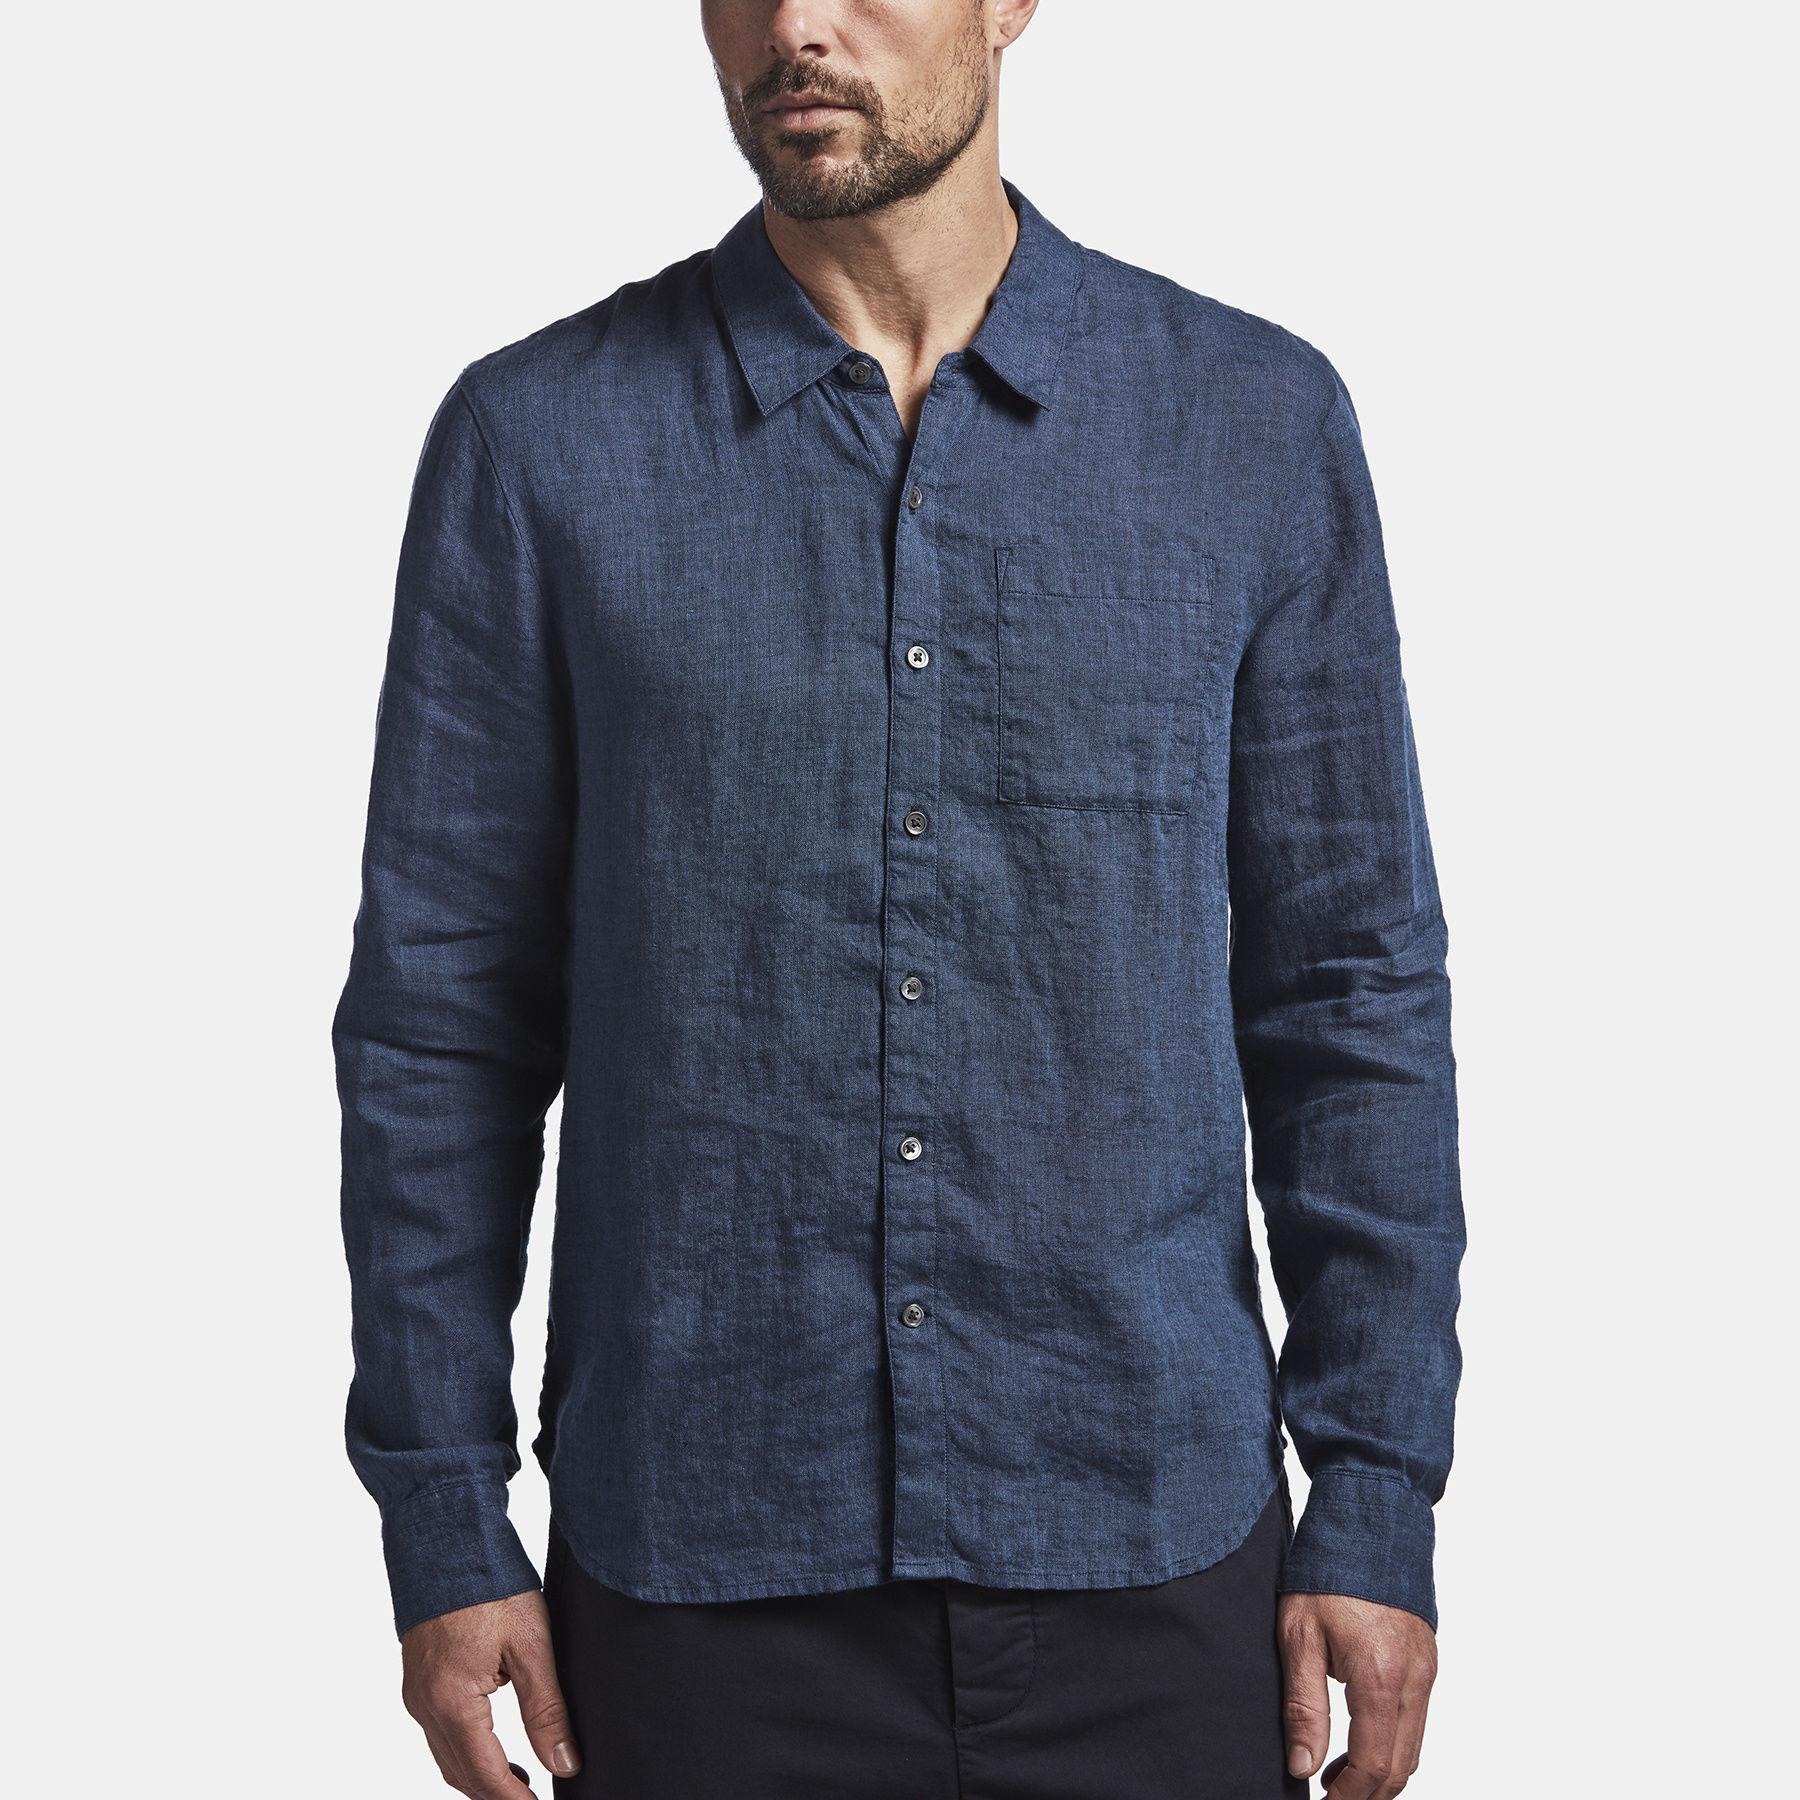 James Perse Long Sleeve Linen Pocket Shirt in Blue for Men - Lyst